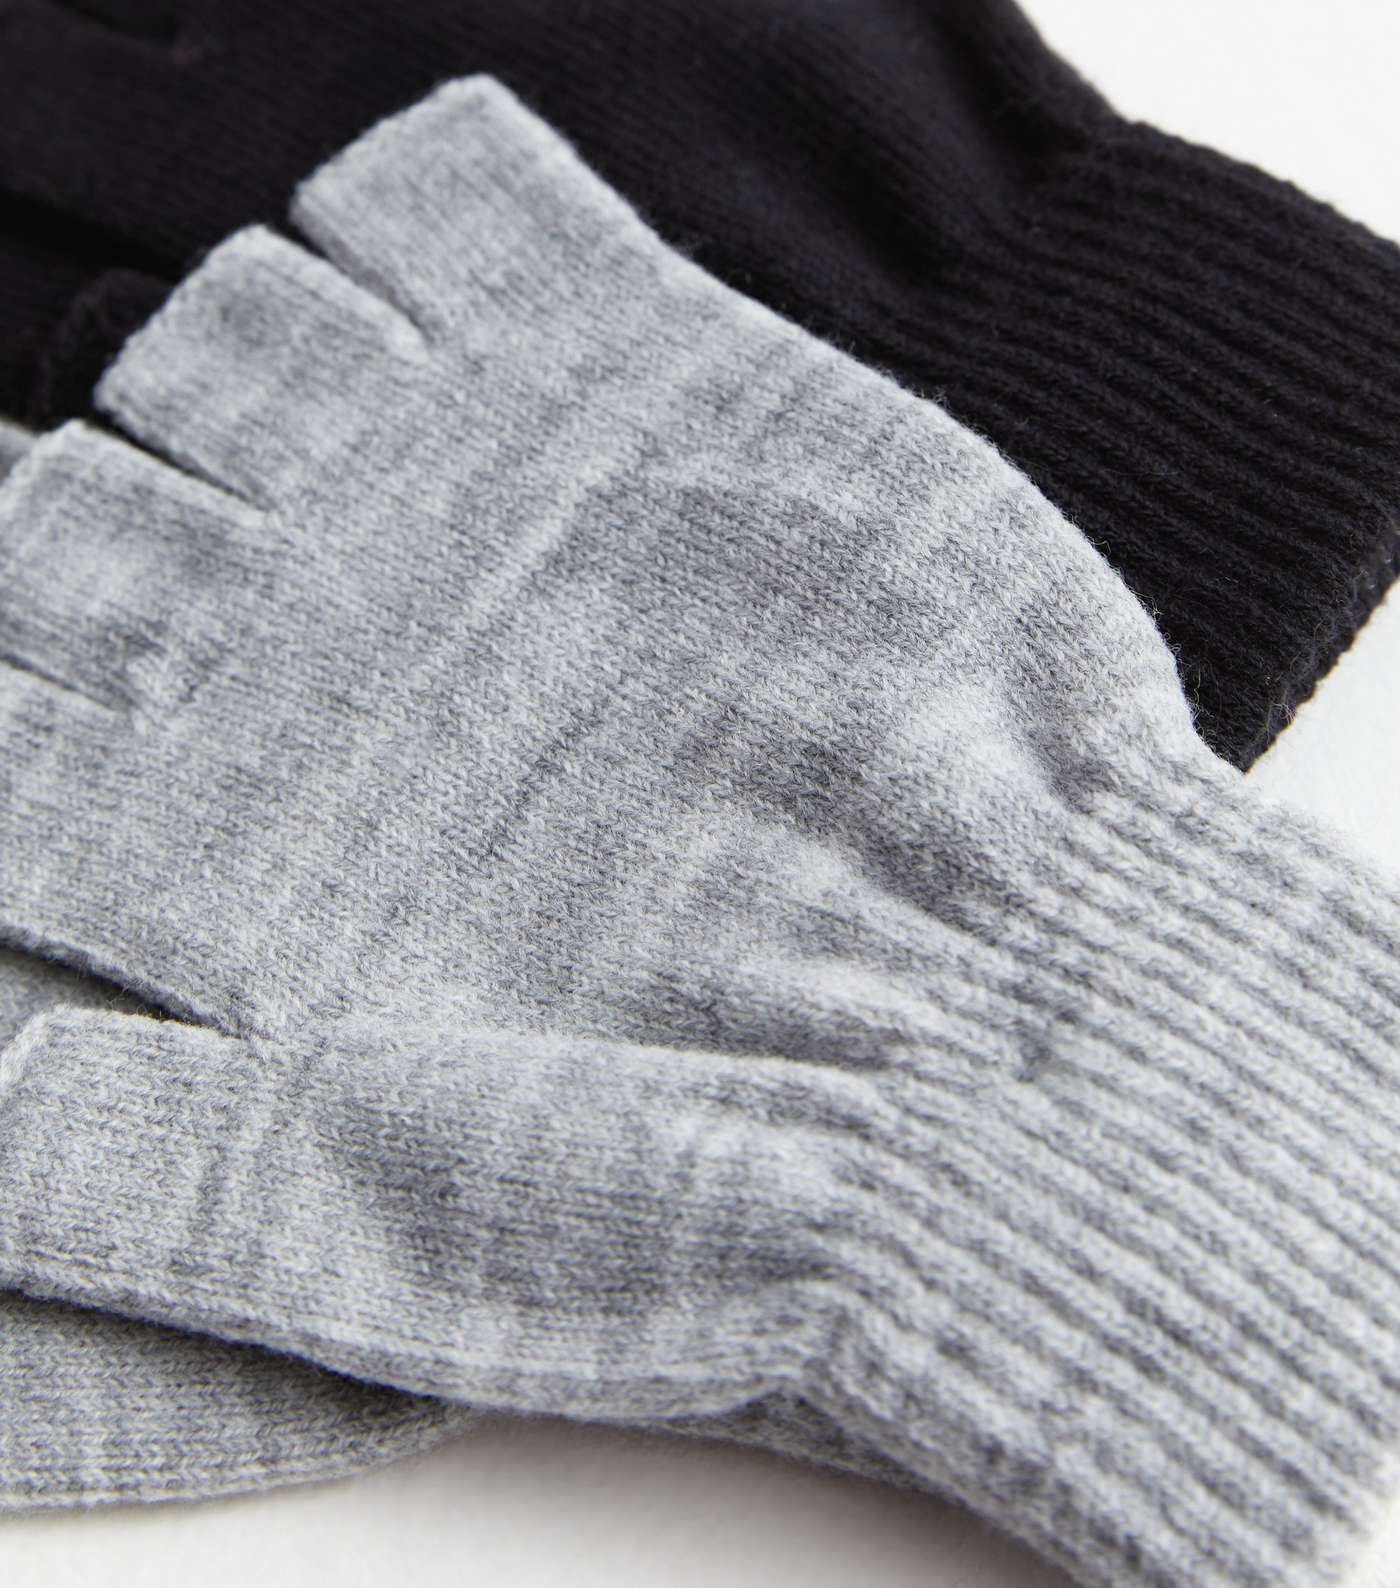 2 Pack Black and Grey Fingerless Gloves Image 2